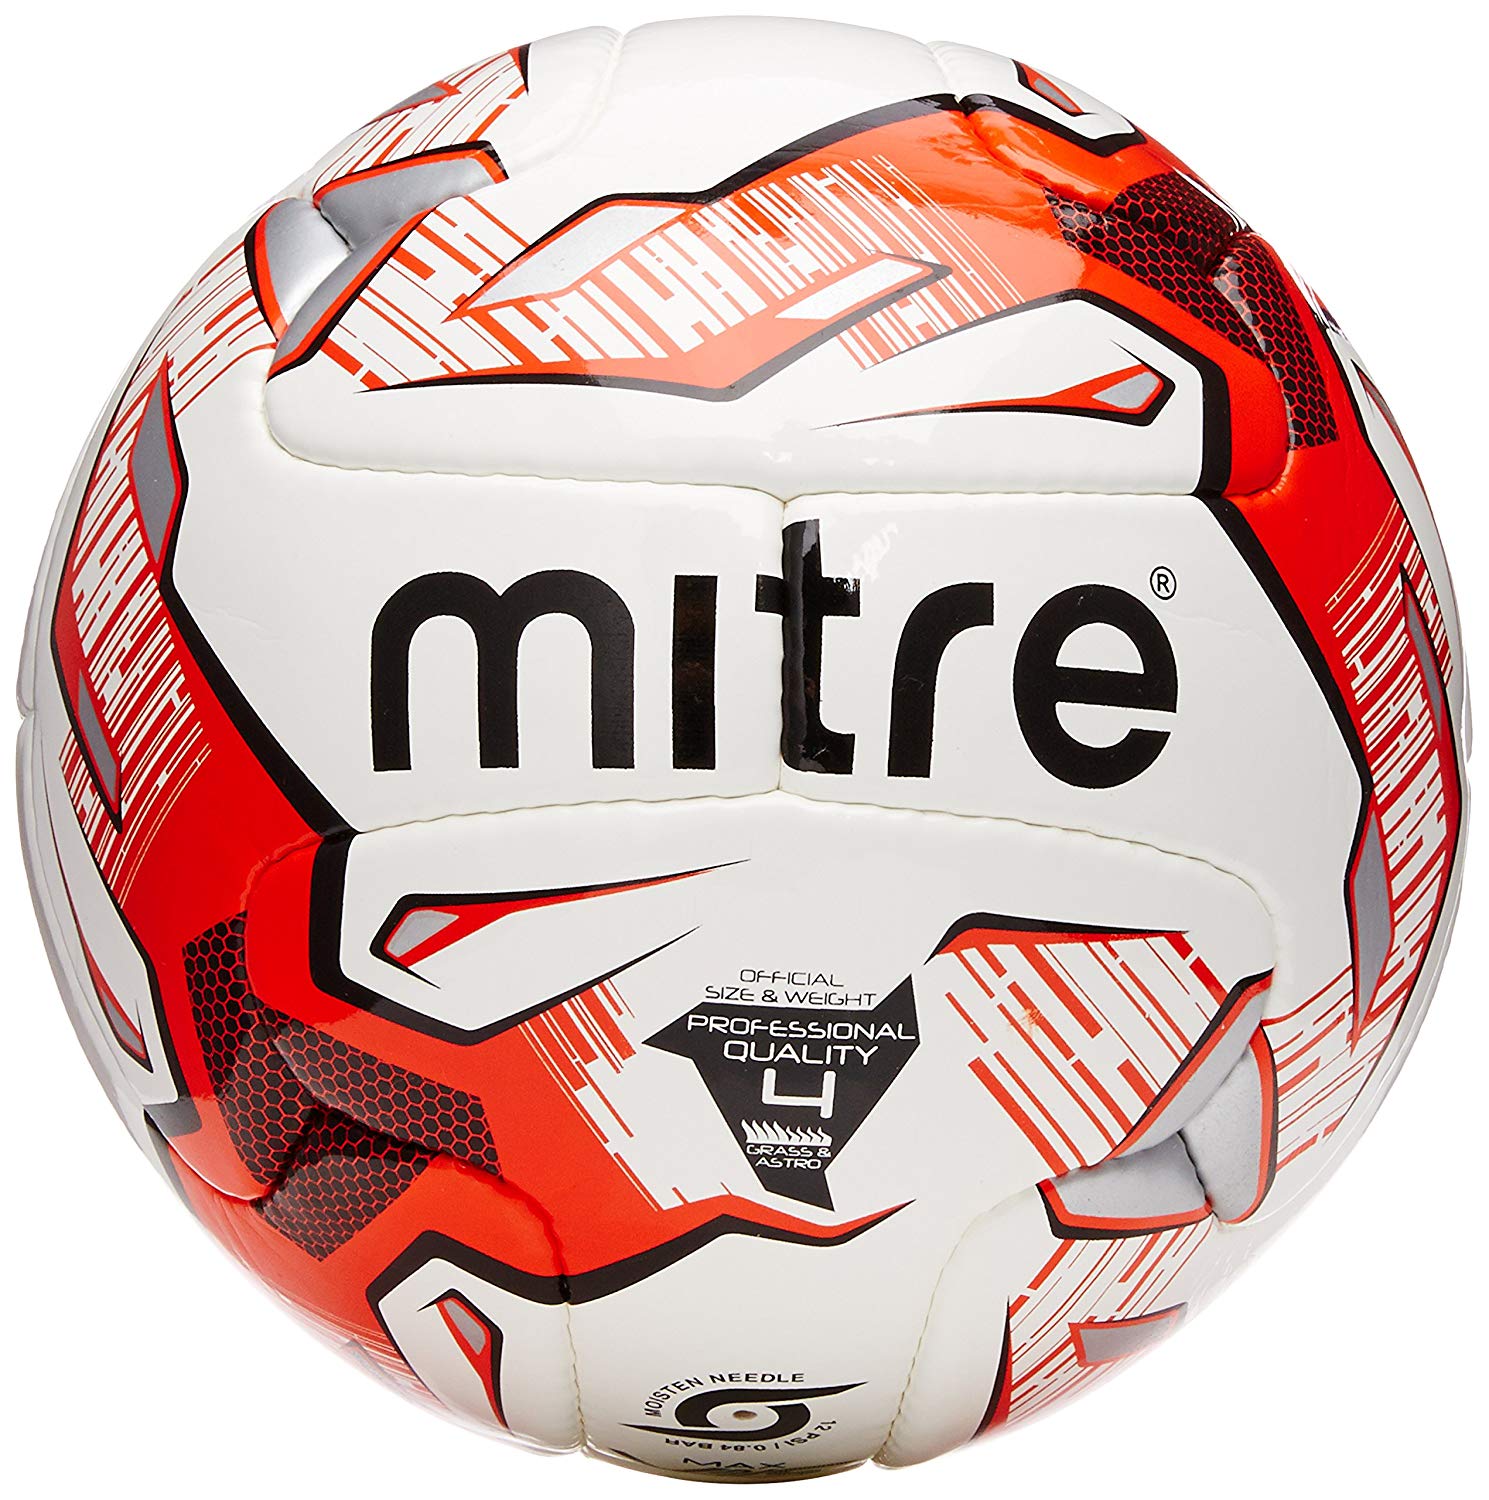 Mitre Max Professional Match Football: Amazon.co.uk: Sports & Outdoors